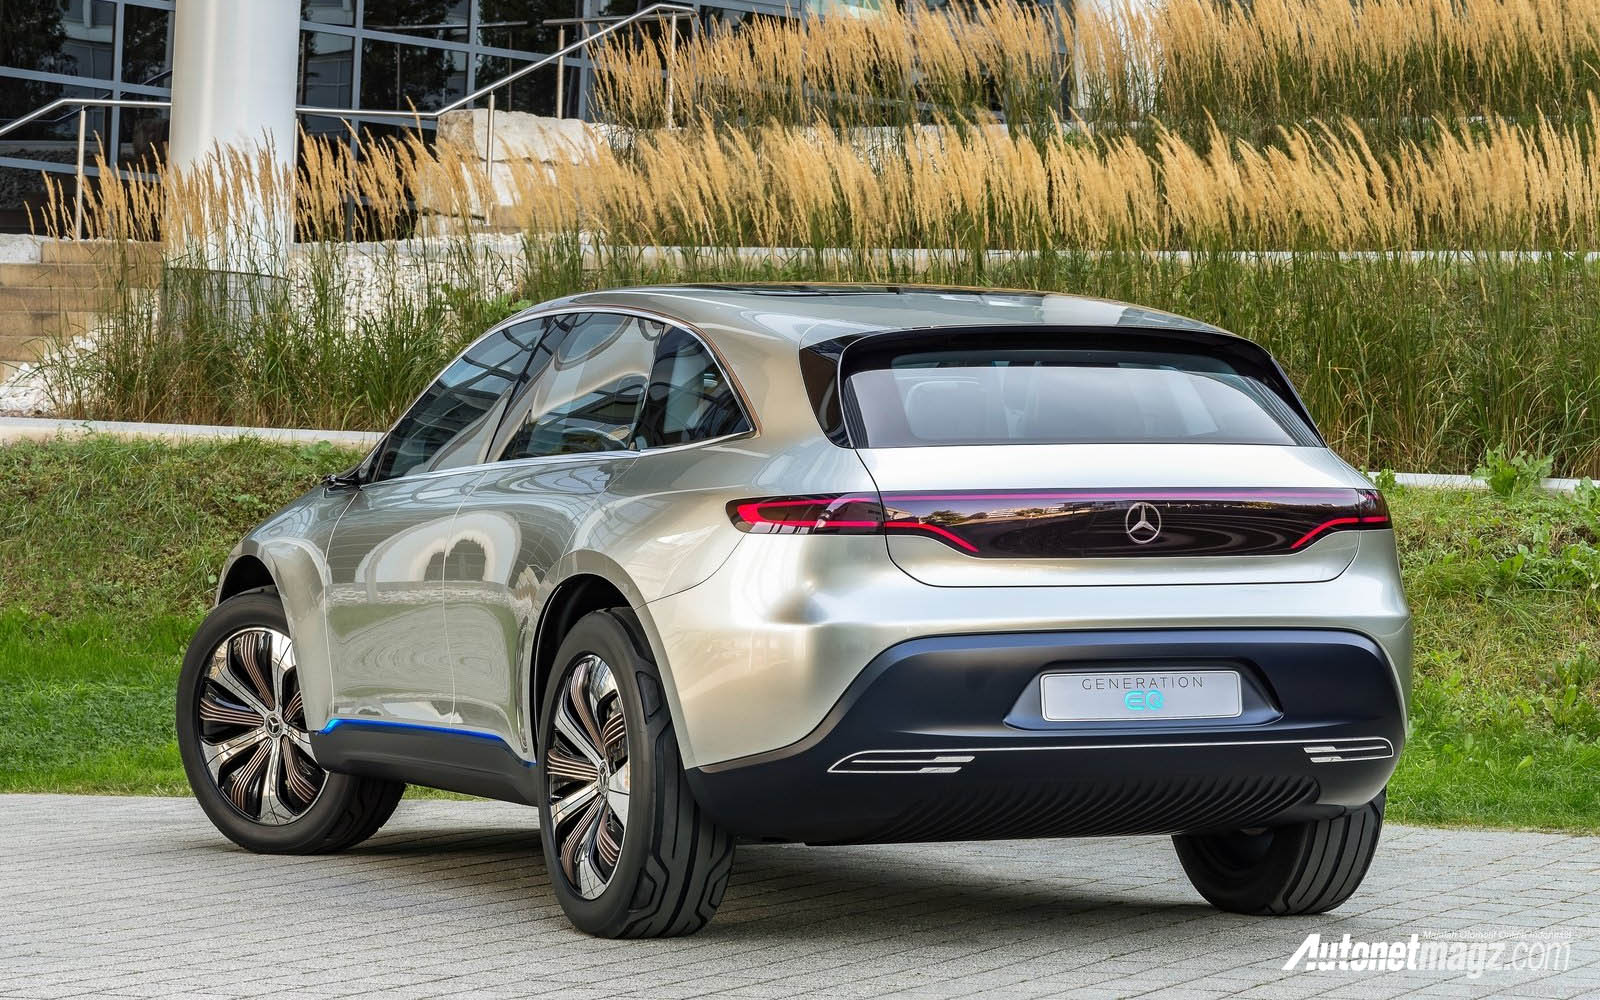 Berita, Mercedes-Benz Generation EQ Concept sisi belakang: Daimler Akan Buka Pabrik Baru Lagi Bersama BAIC